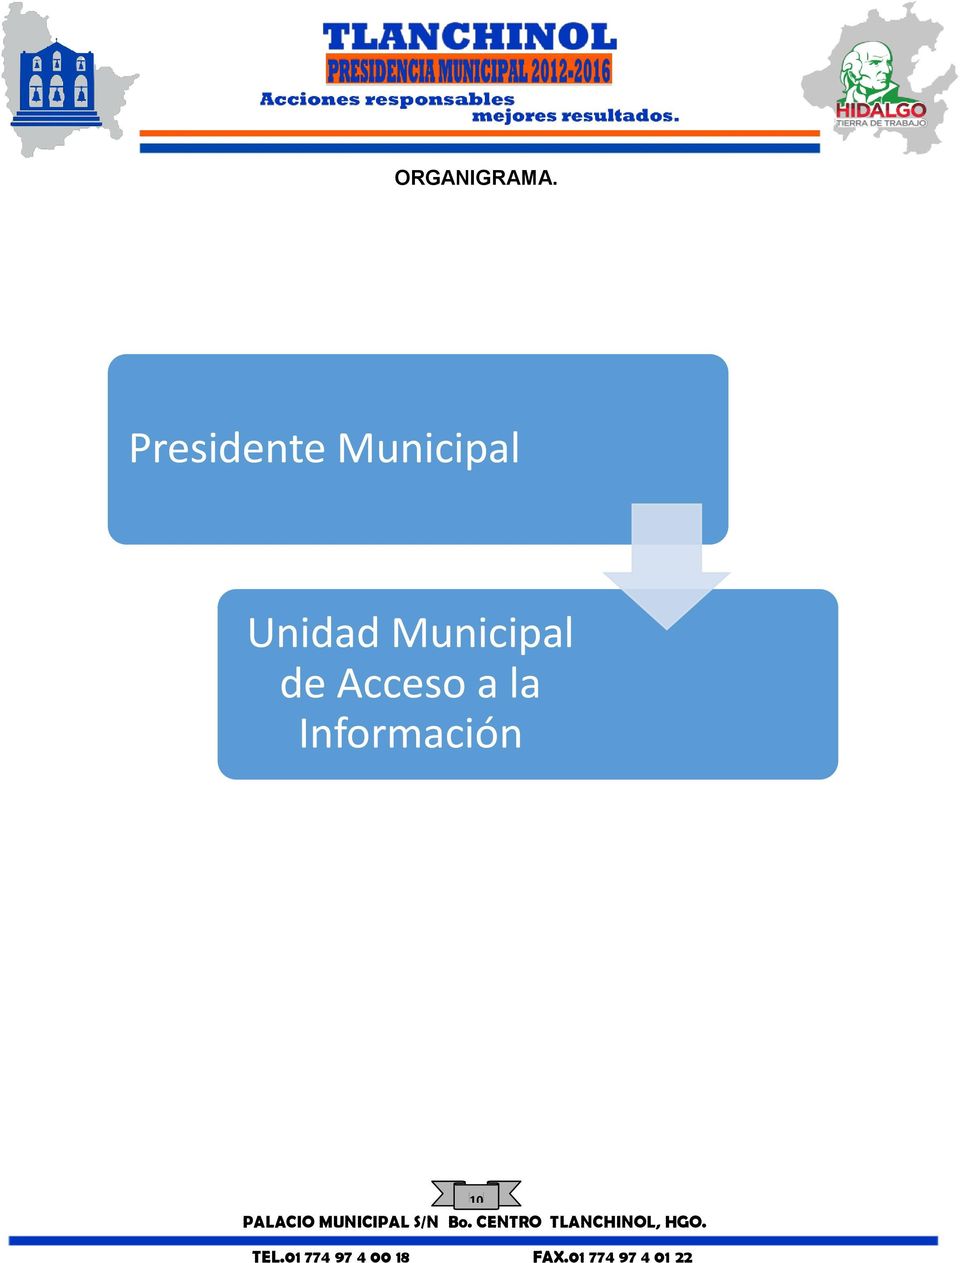 Municipal Unidad